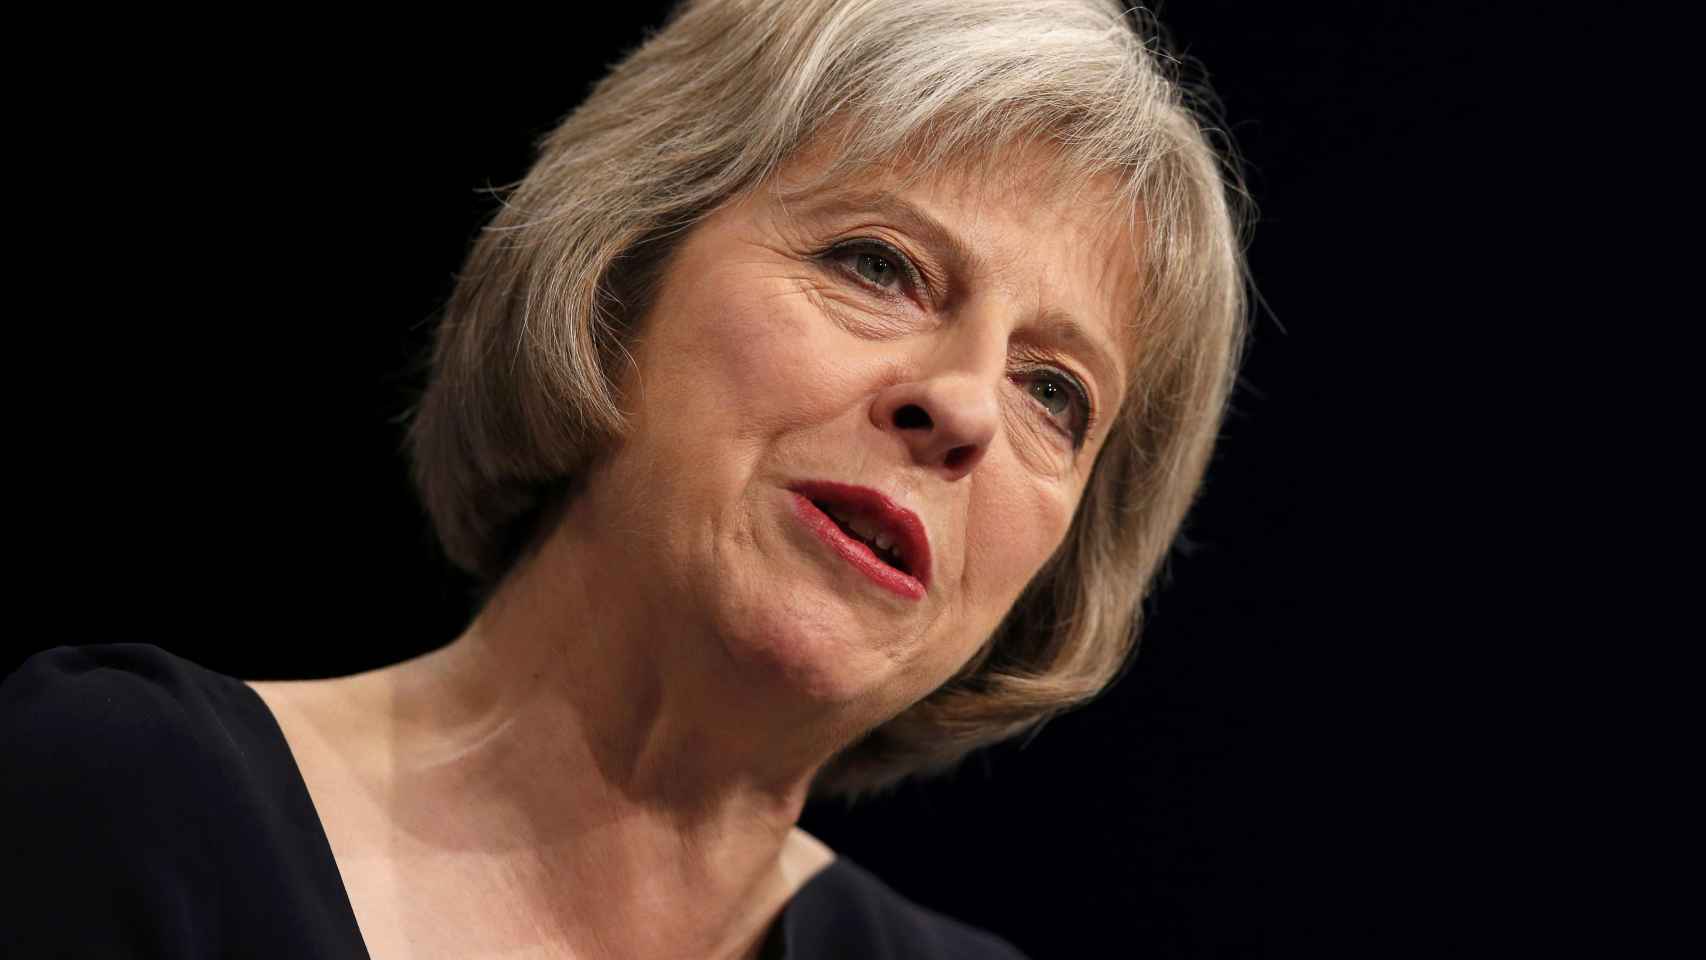 La ministra de Interior británica, Theresa May, ha mantenido un perfil bajo.